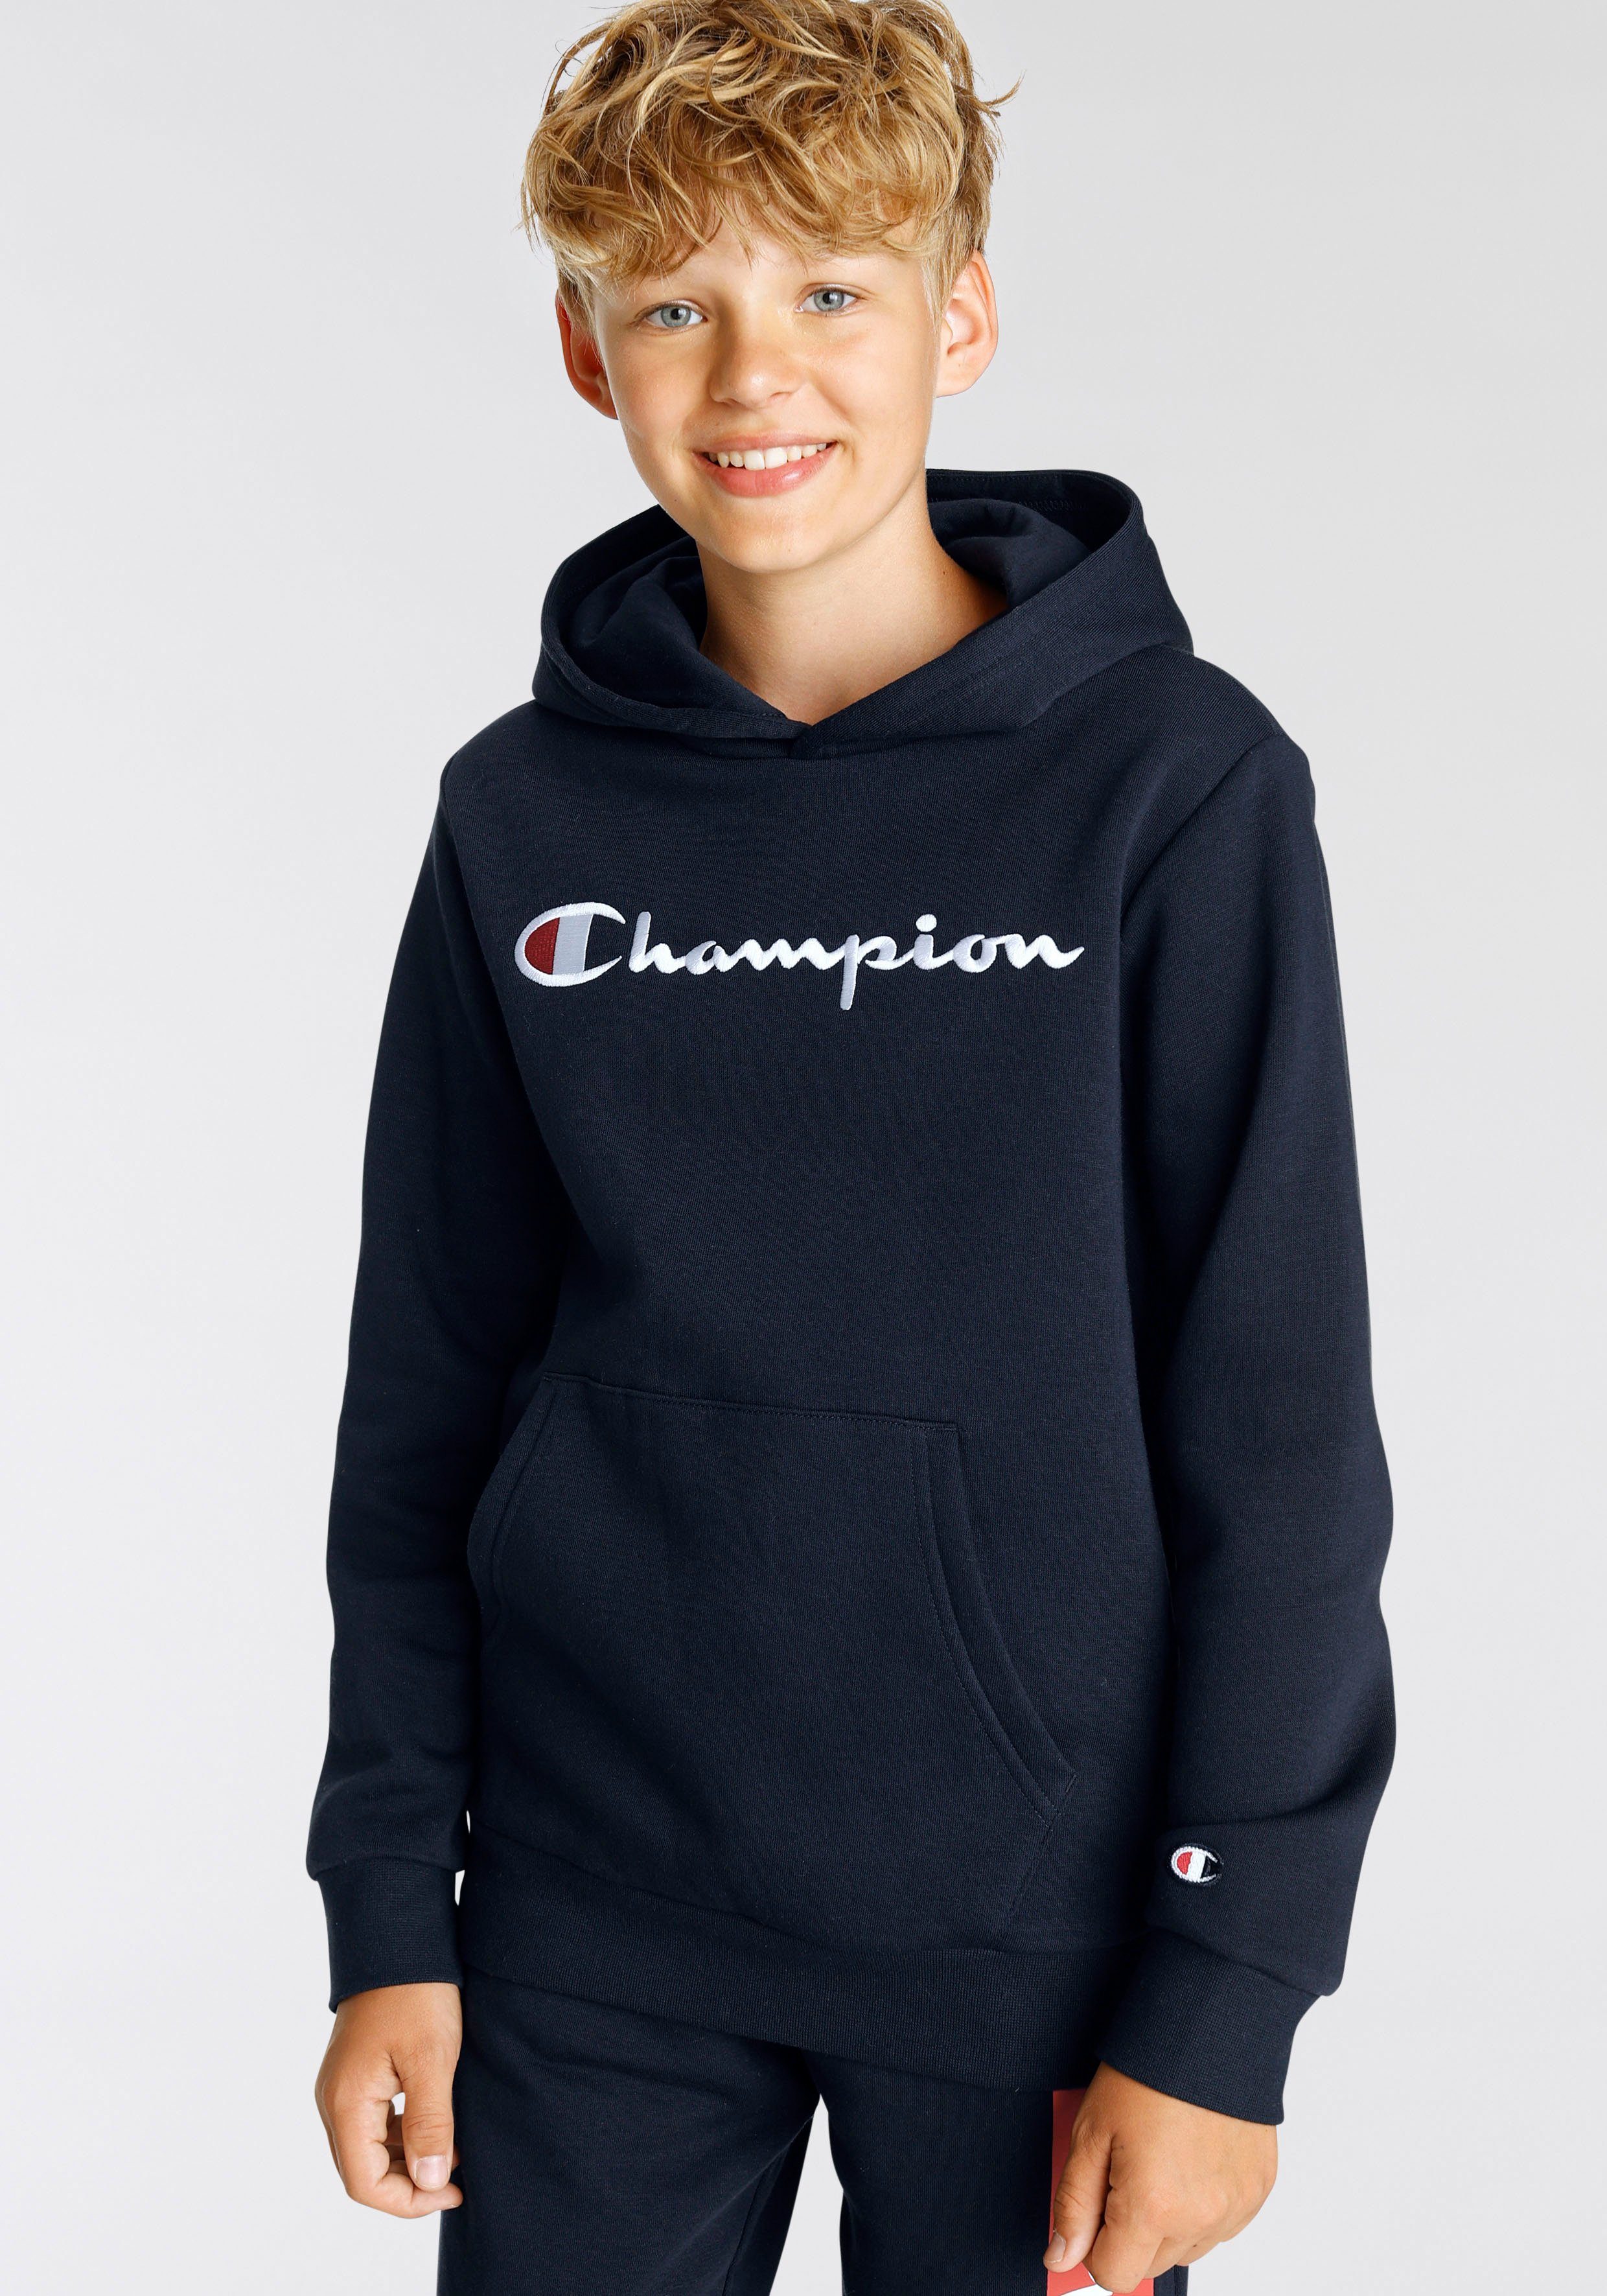 Champion Sweatshirt Classic Hooded Sweatshirt large Logo - für Kinder marine